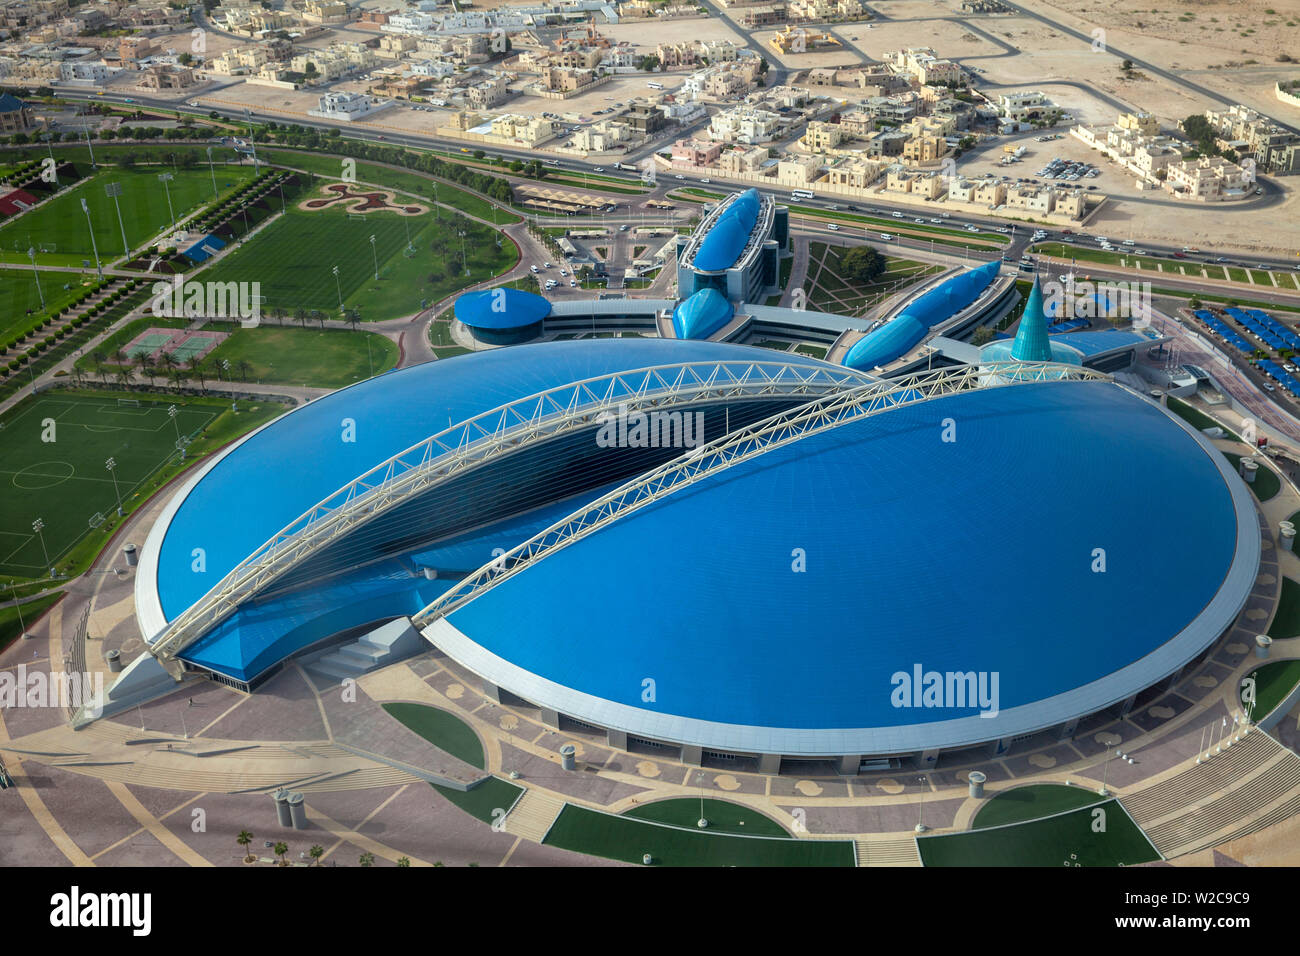 Qatar, Doha, View of Aspire Sports Center Stock Photo